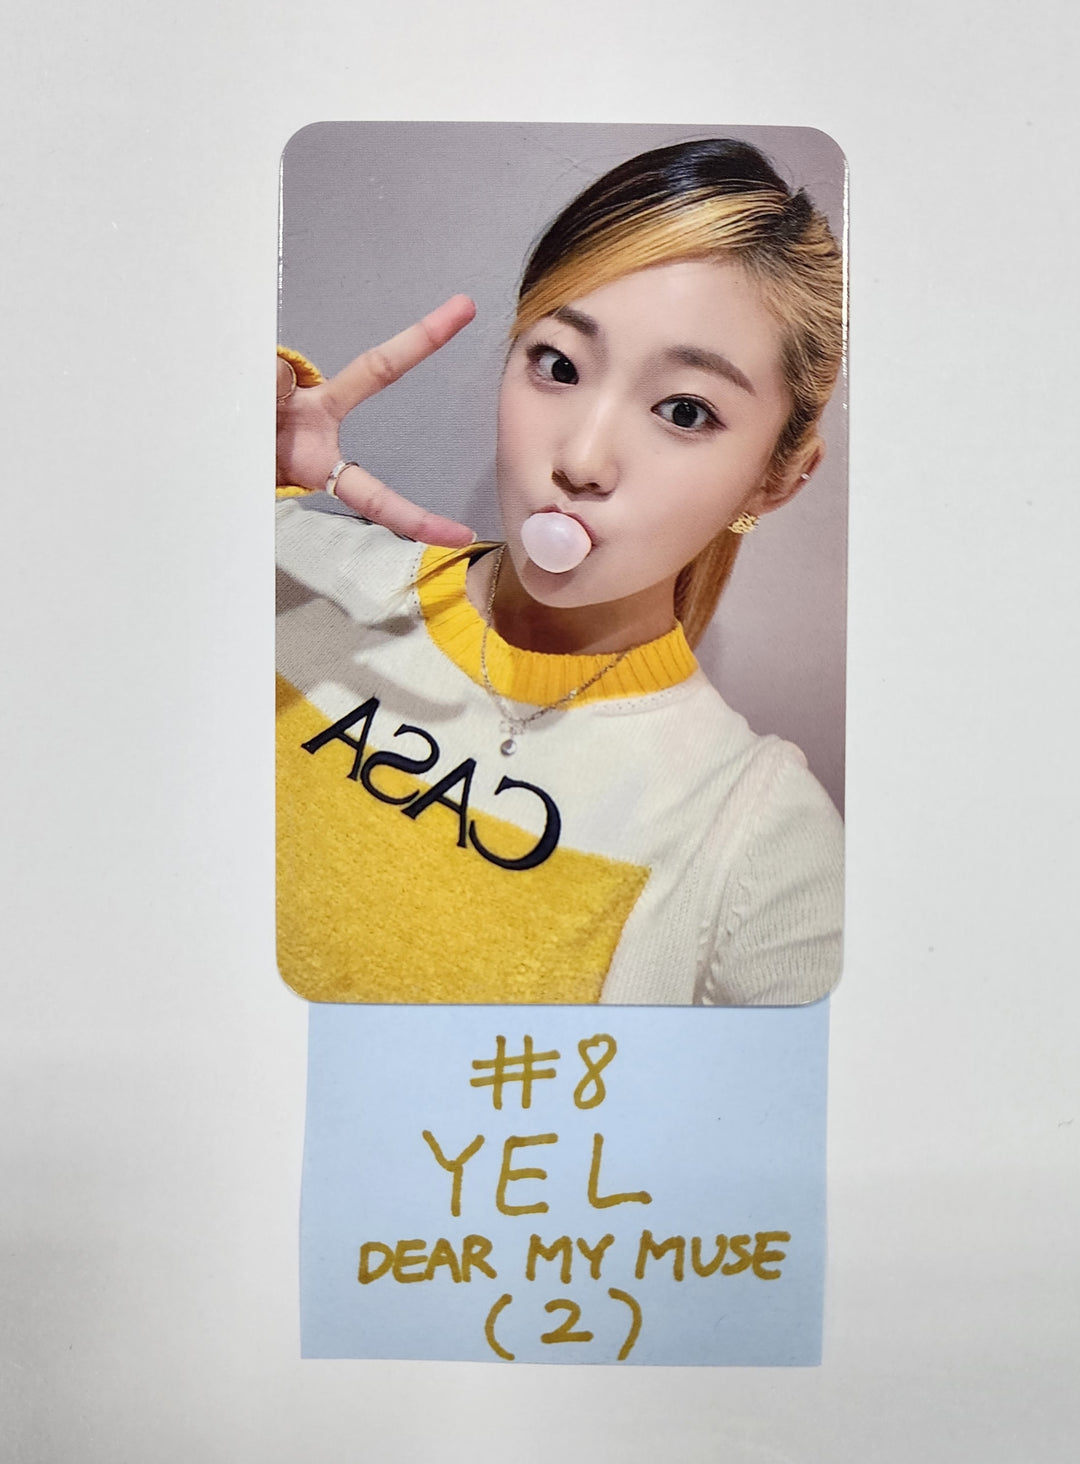 H1-KEY "Rose Blossom" Mini 1st - Dear My Muse 팬사인회 이벤트 포토카드